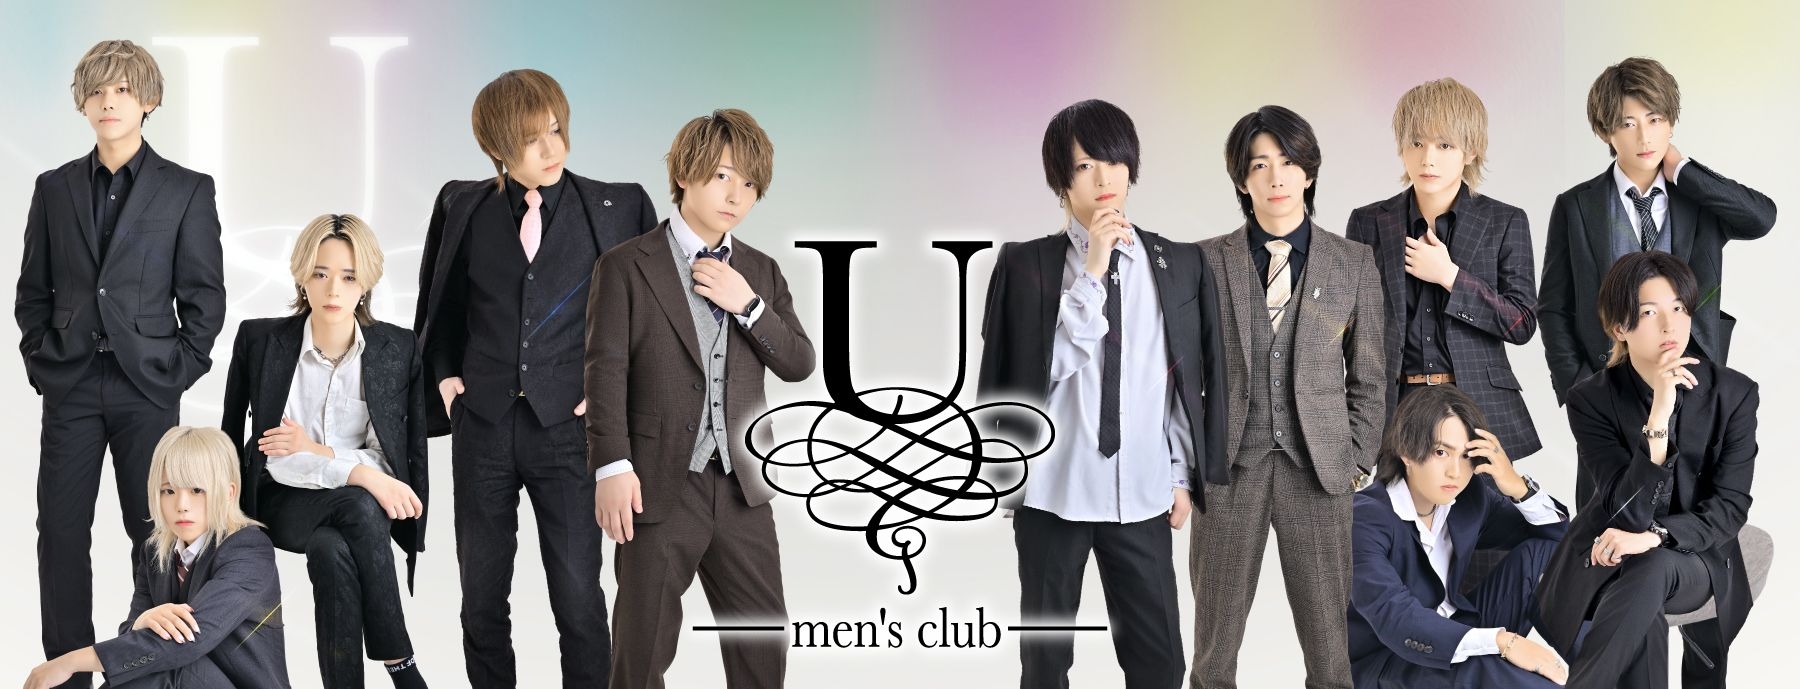 U men's club 〜ユー〜